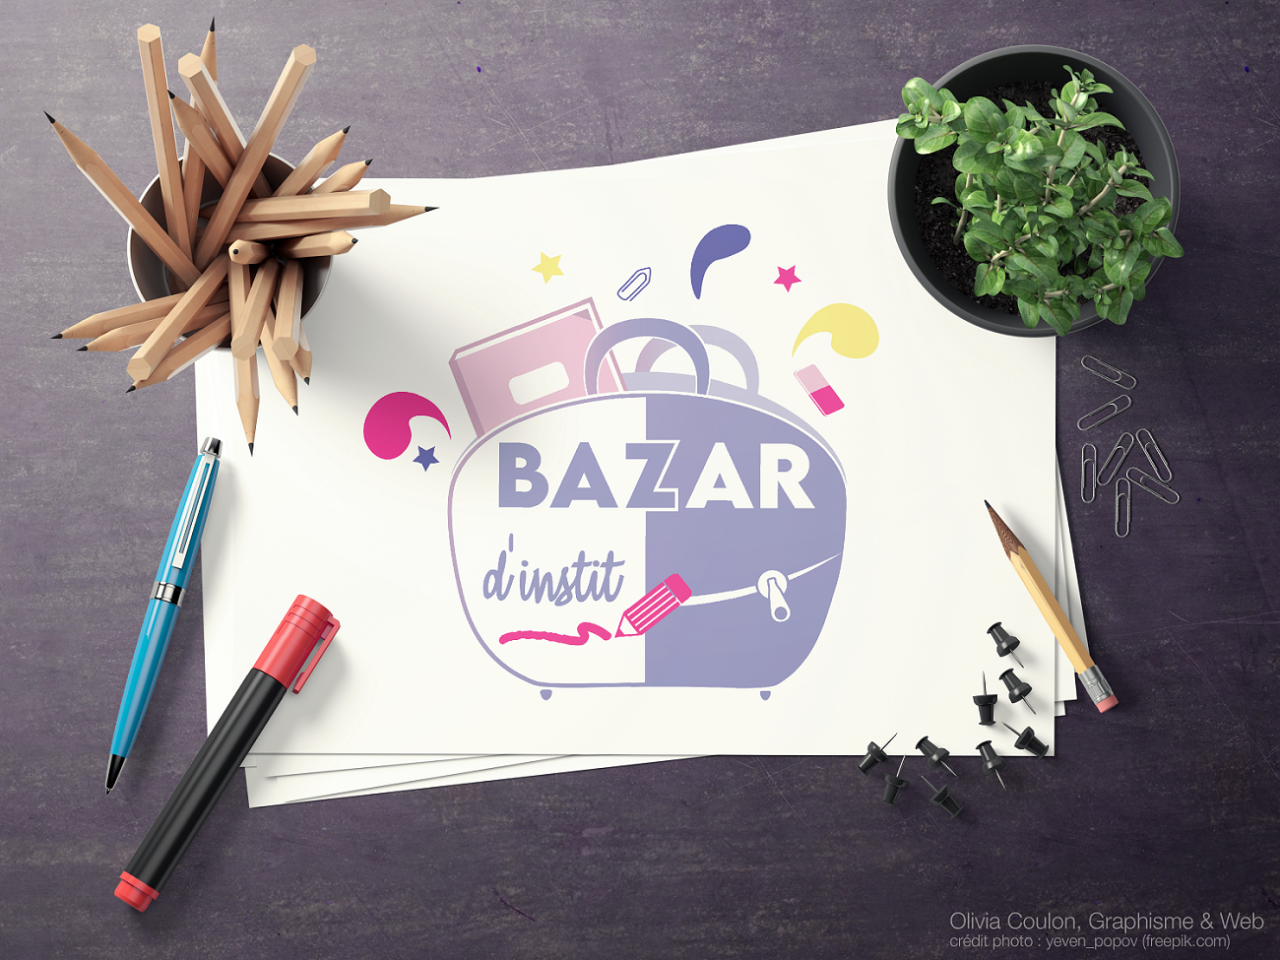 Logo Bazar d'instit